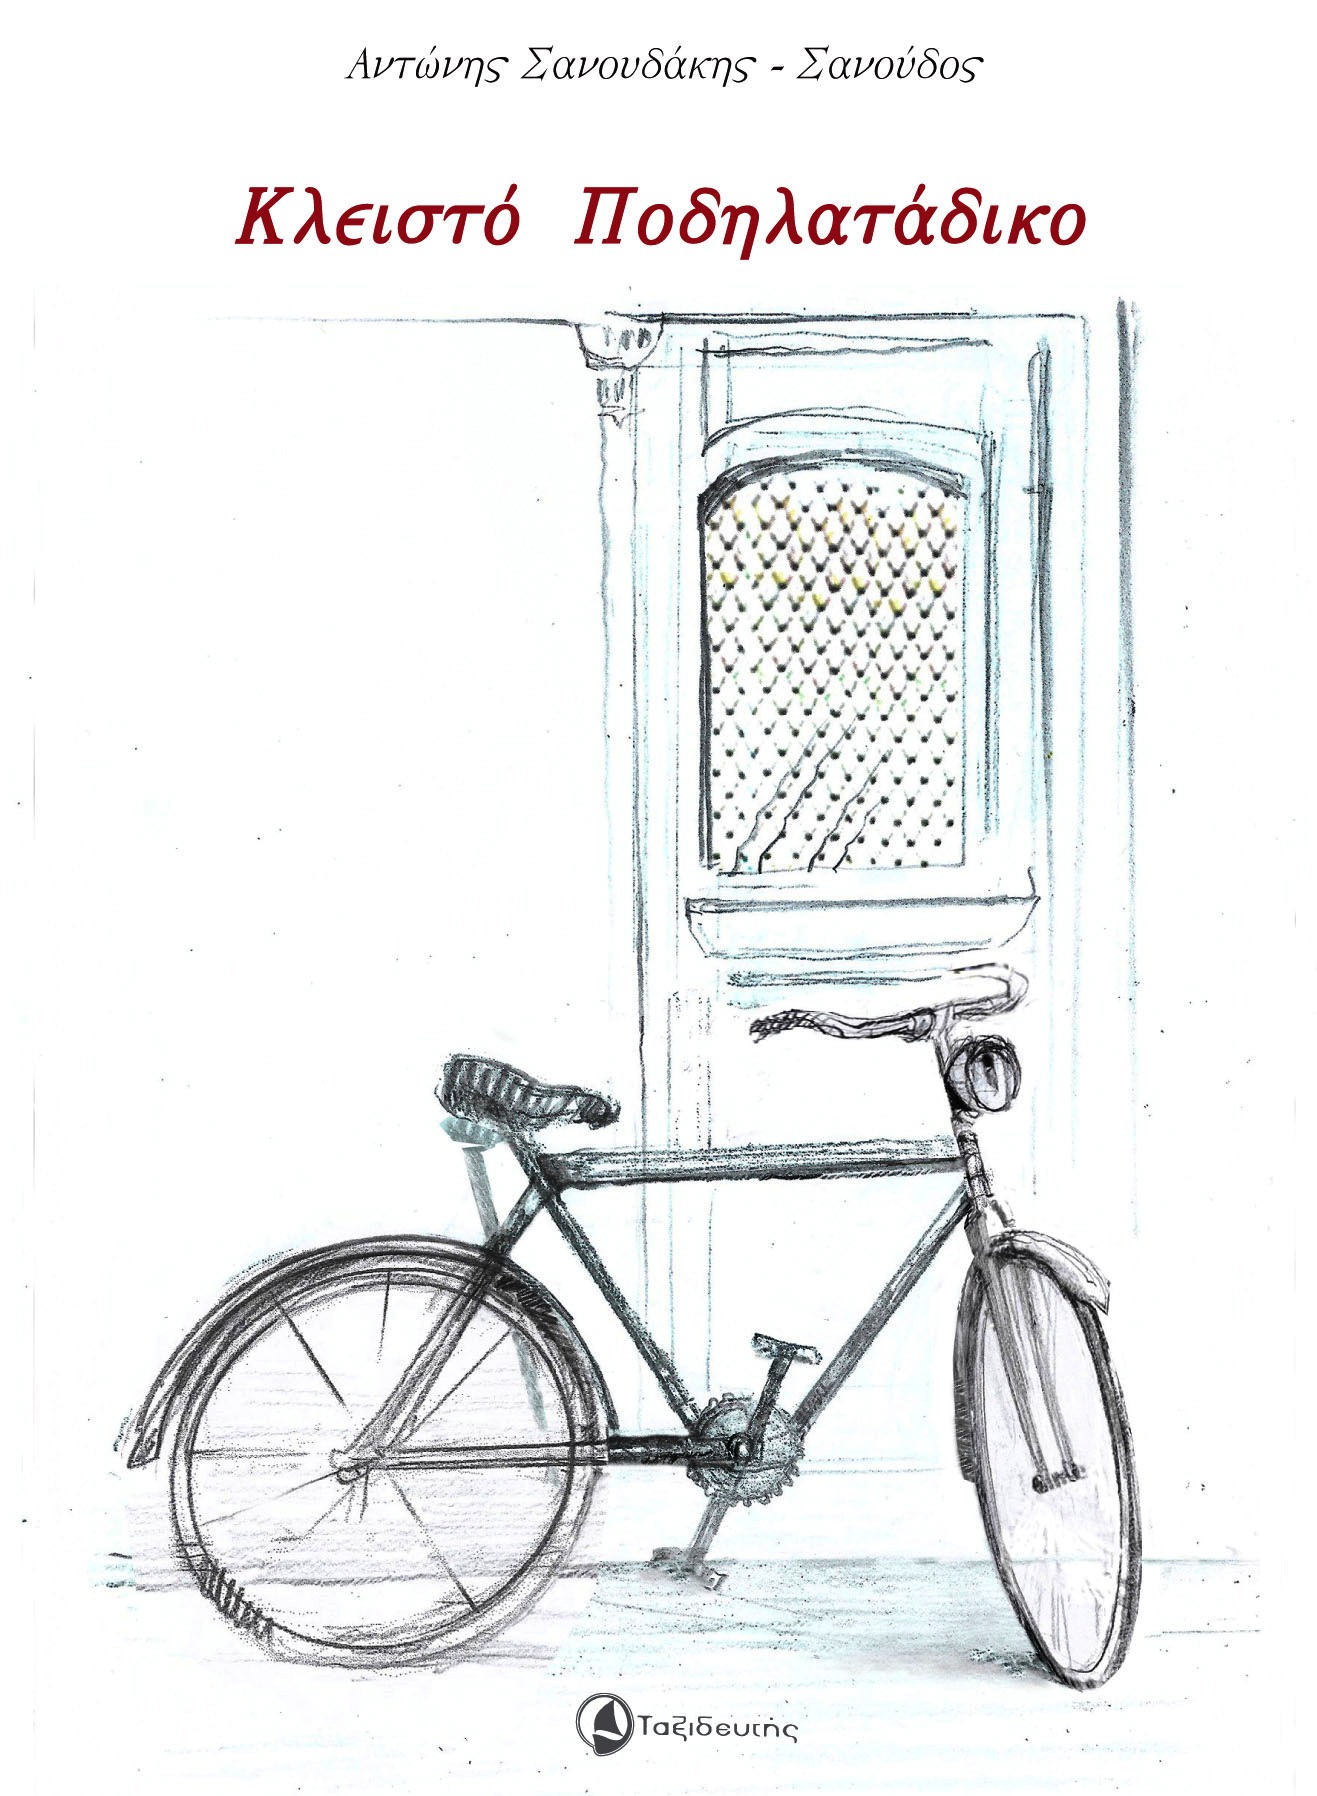 You are currently viewing Ανθούλα Δανιήλ: Αντώνης Σανουδάκις, Κλειστό ποδηλατάδικο, Εκδόσεις Ταξιδευτής, 2021